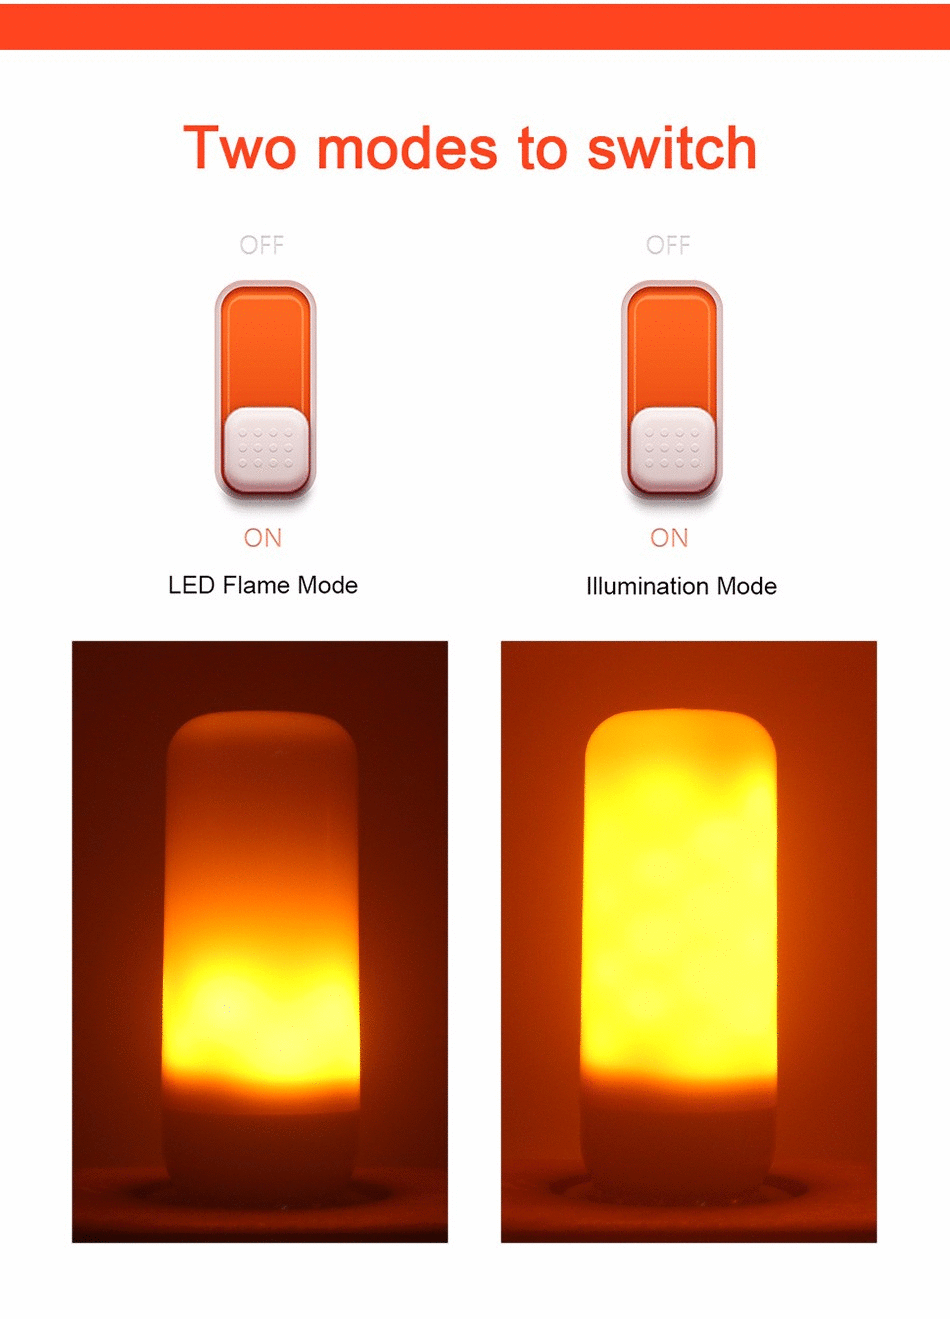 LED Vlammende Vuurlamp